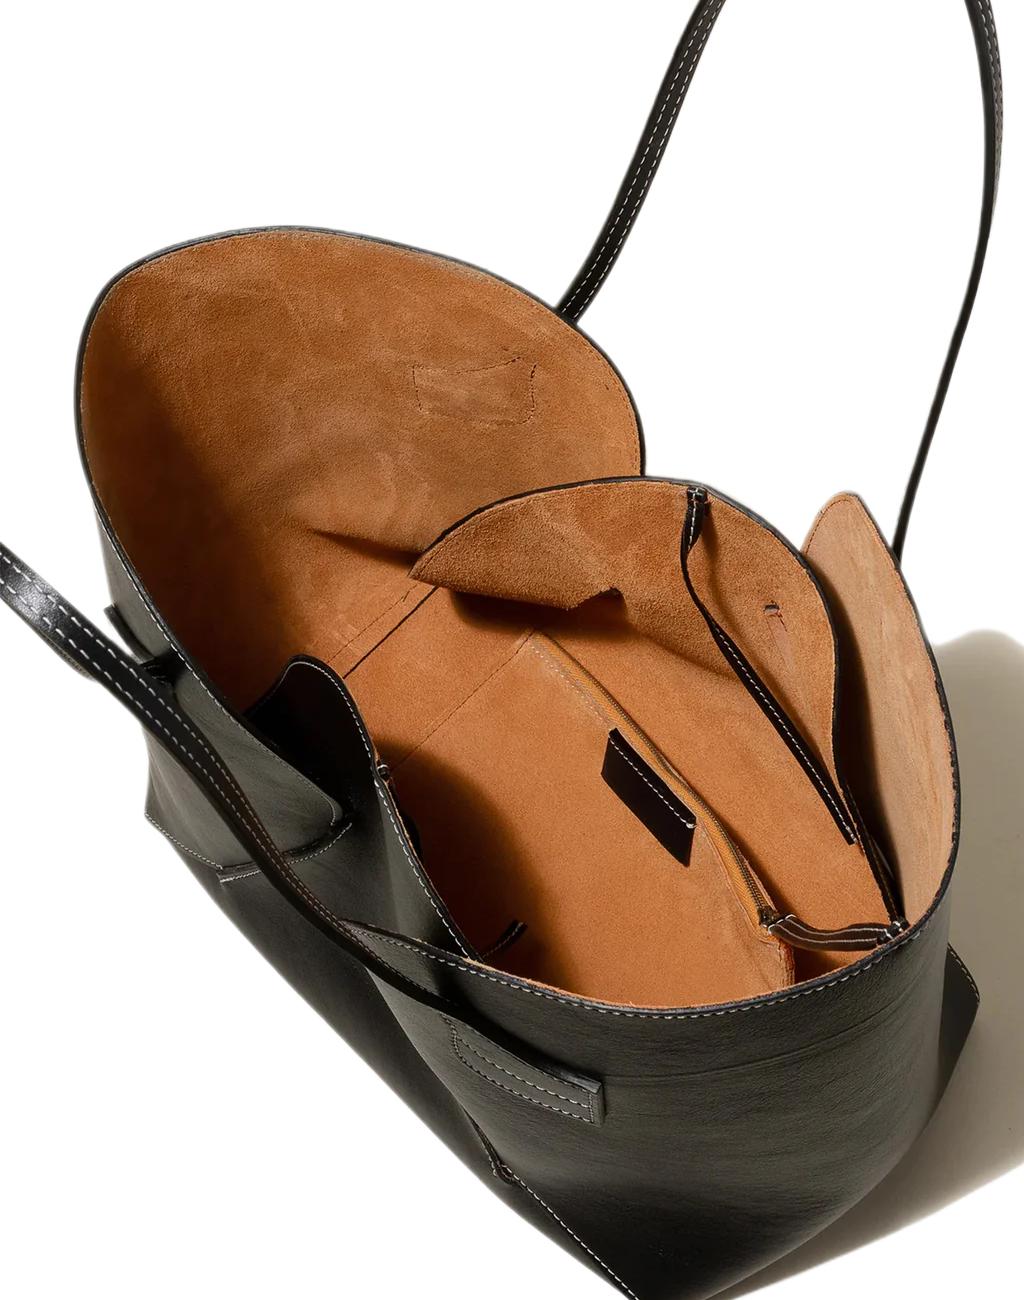 SEPAL stitch-embellished leather tote bag